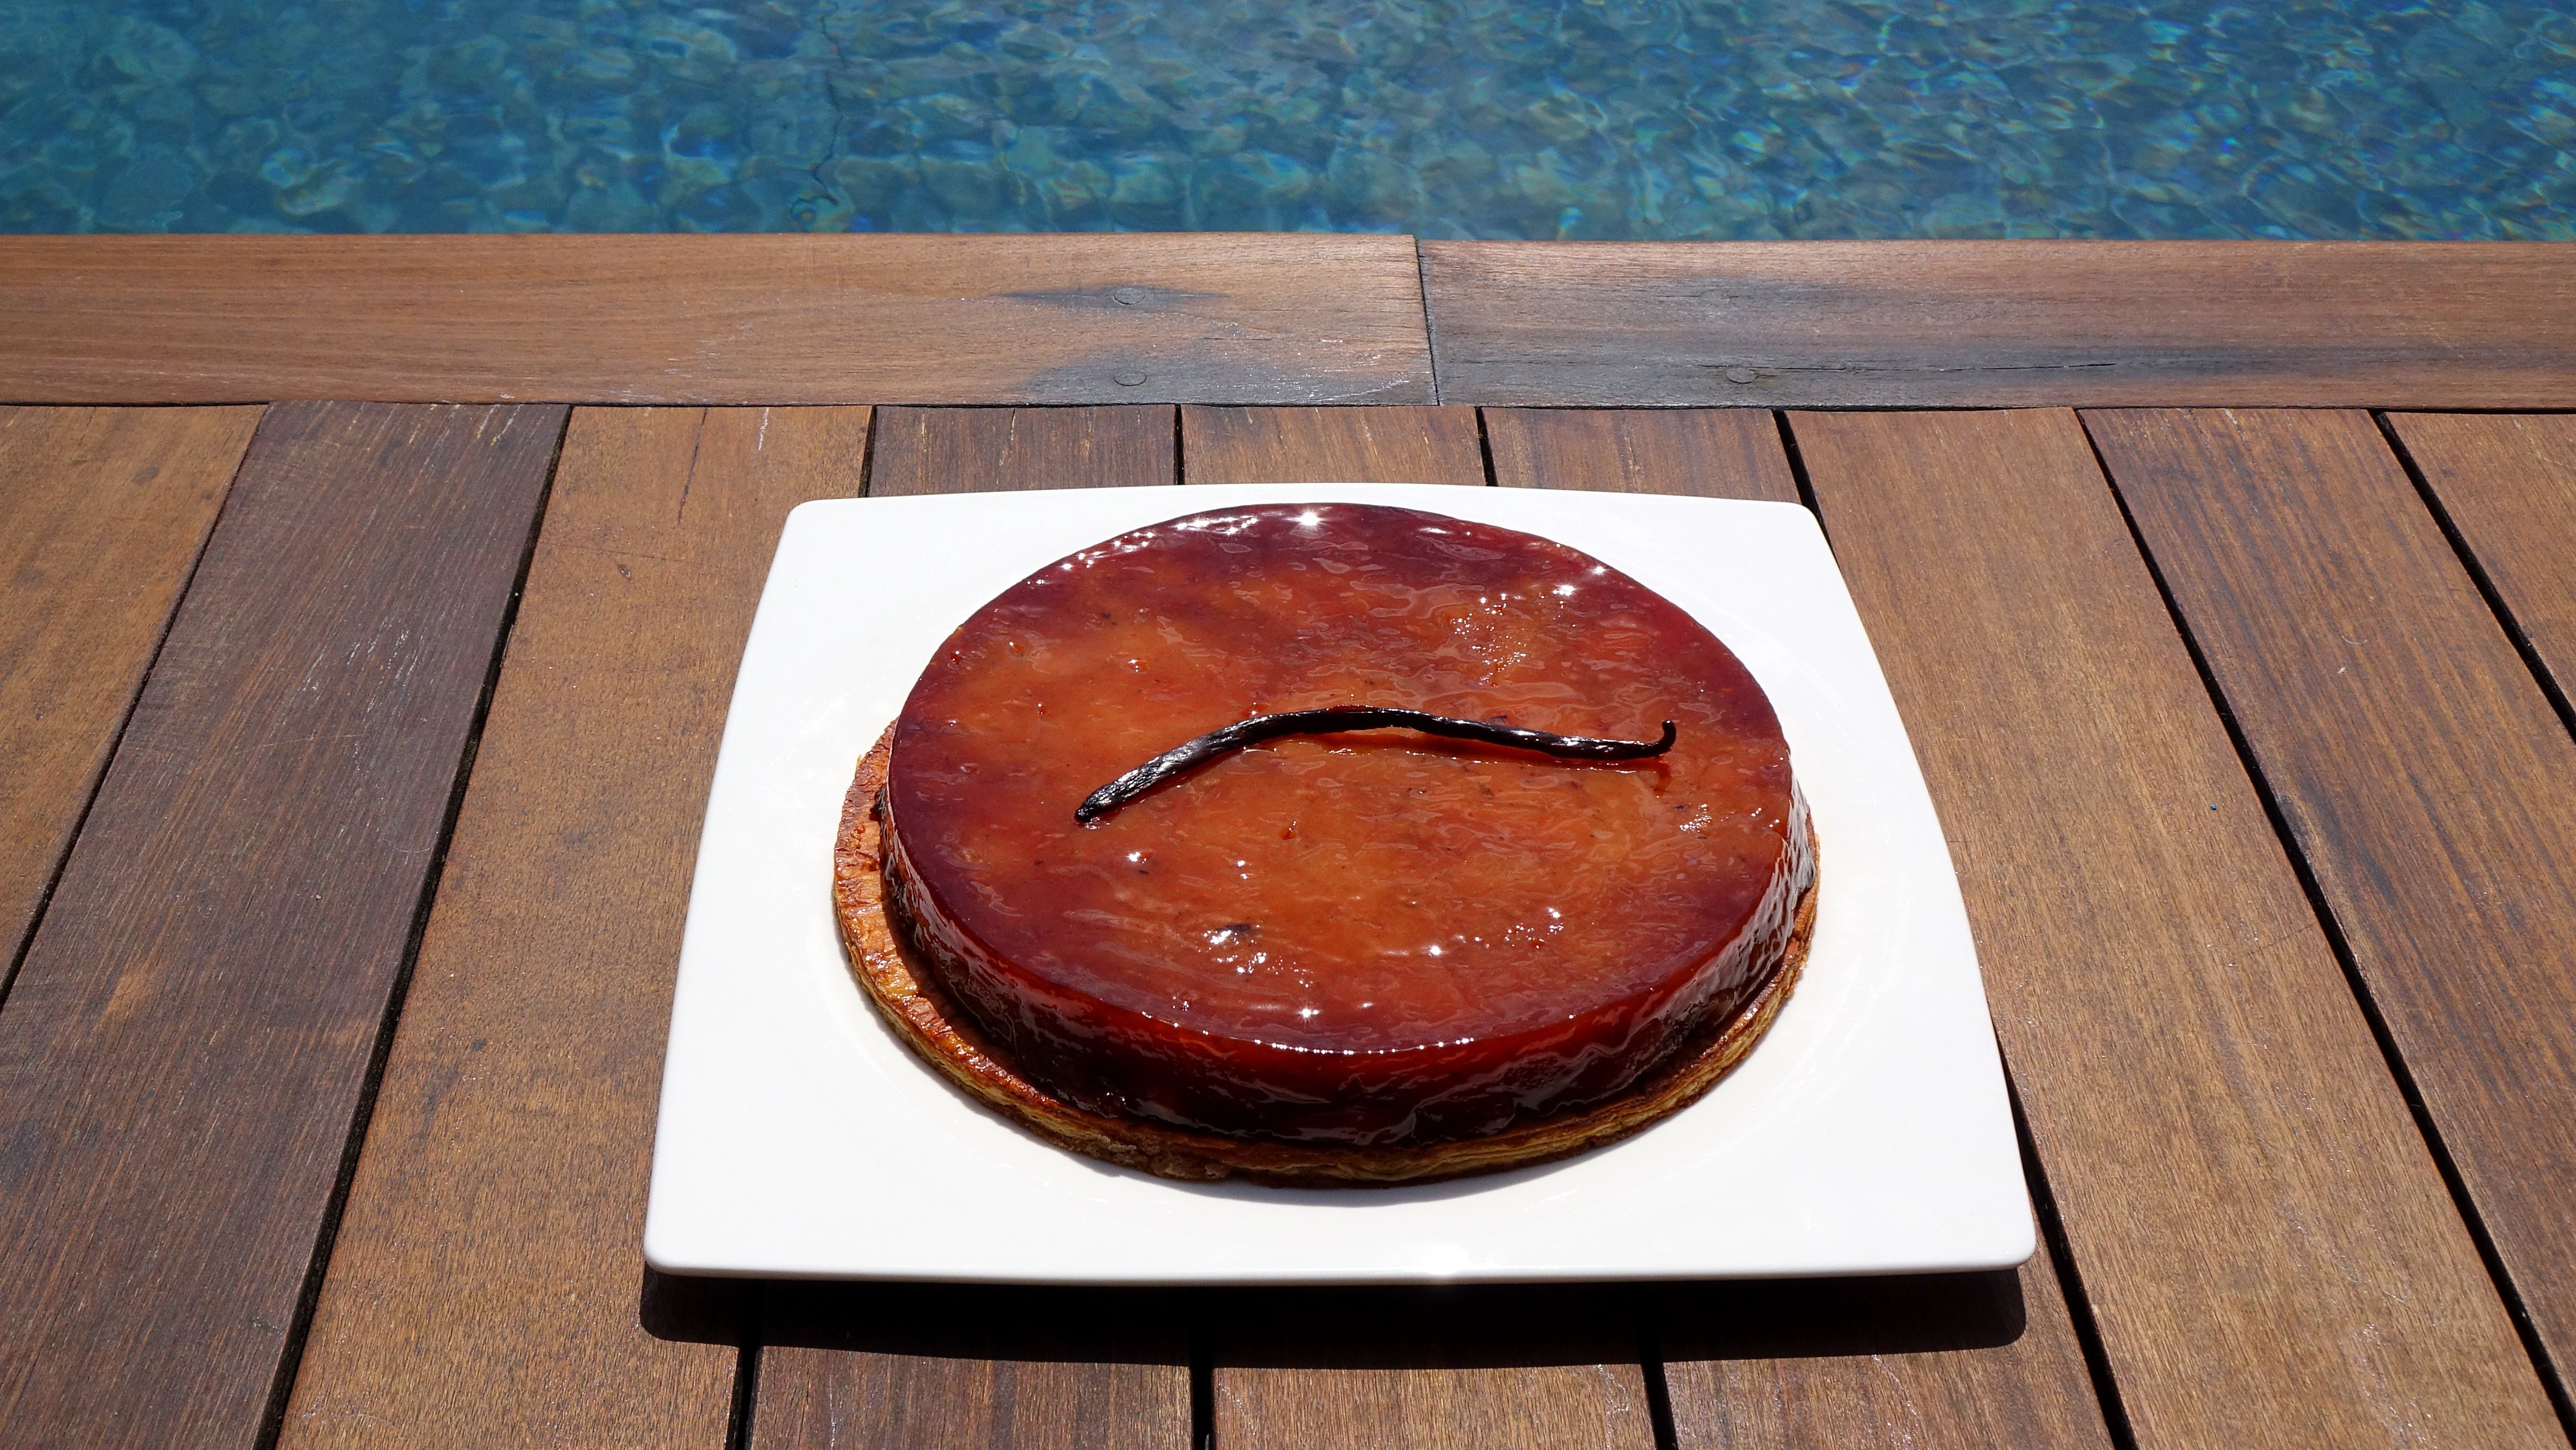 RECETA | La clásica tarta Tatin de manzana hecha en casa